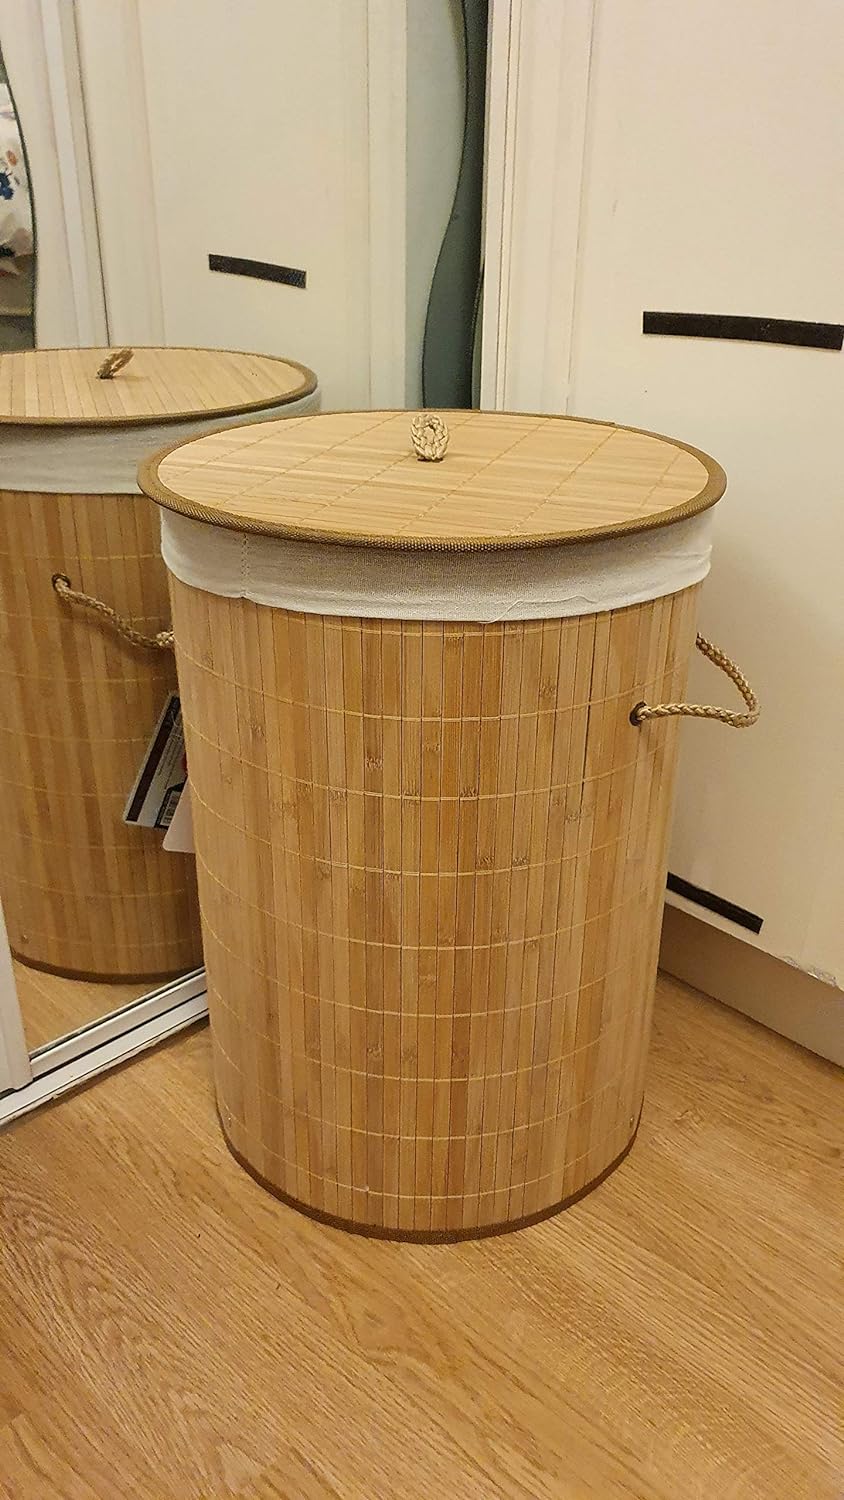 ADEPTNA Eco Friendly Round Bamboo wooden Folding Laundry Basket